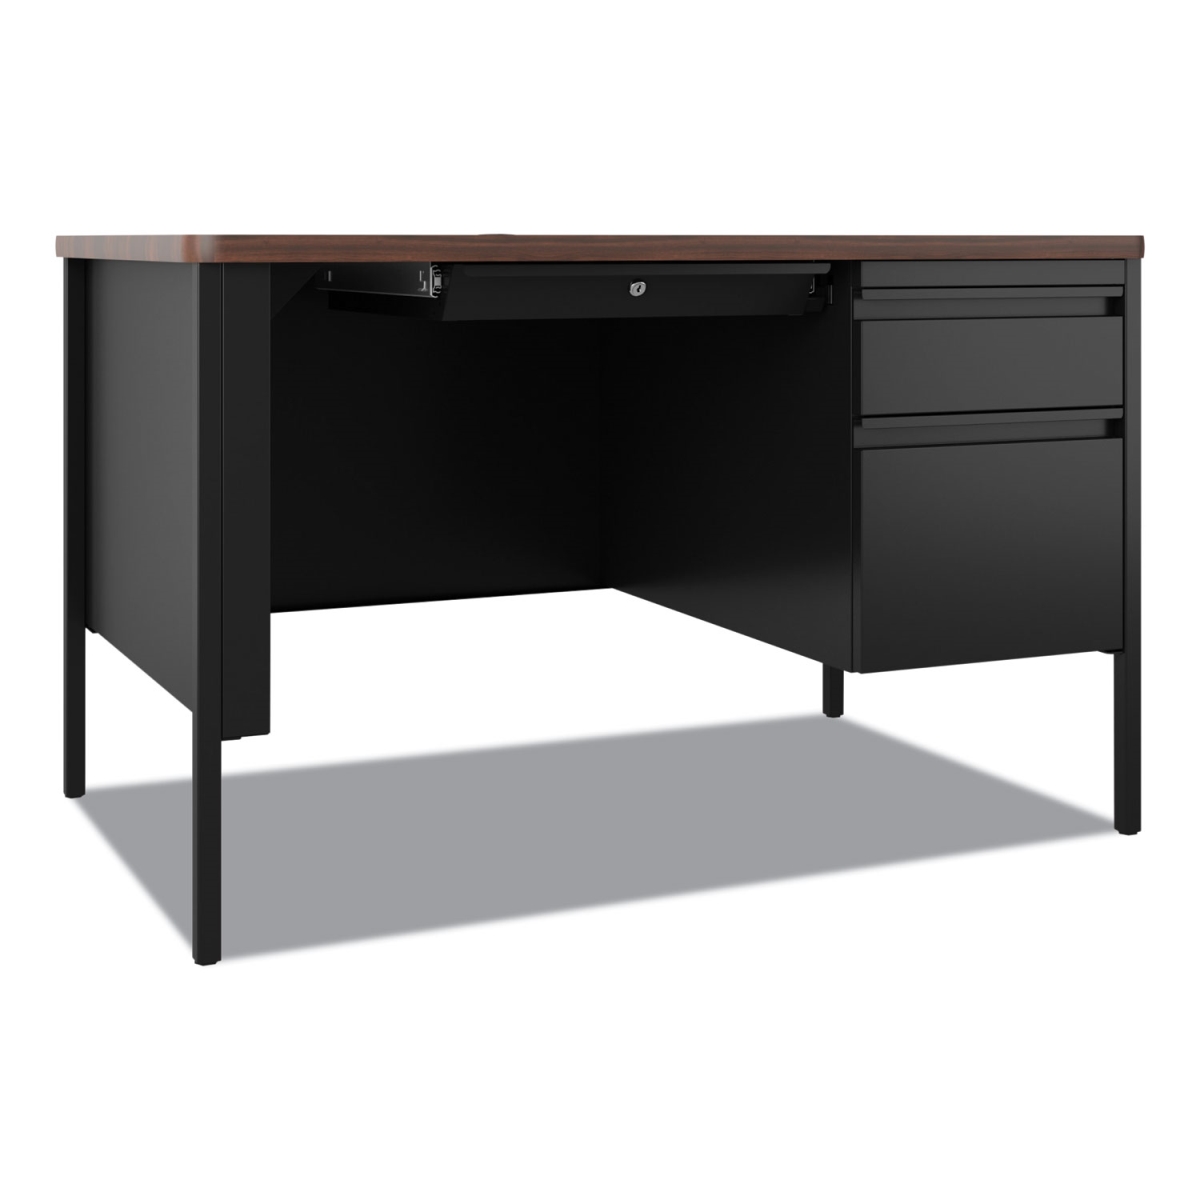 HID22652 30 x 48 in. Single Teachers Pedestal Desk, Black & Walnut -  Hirsh Industries